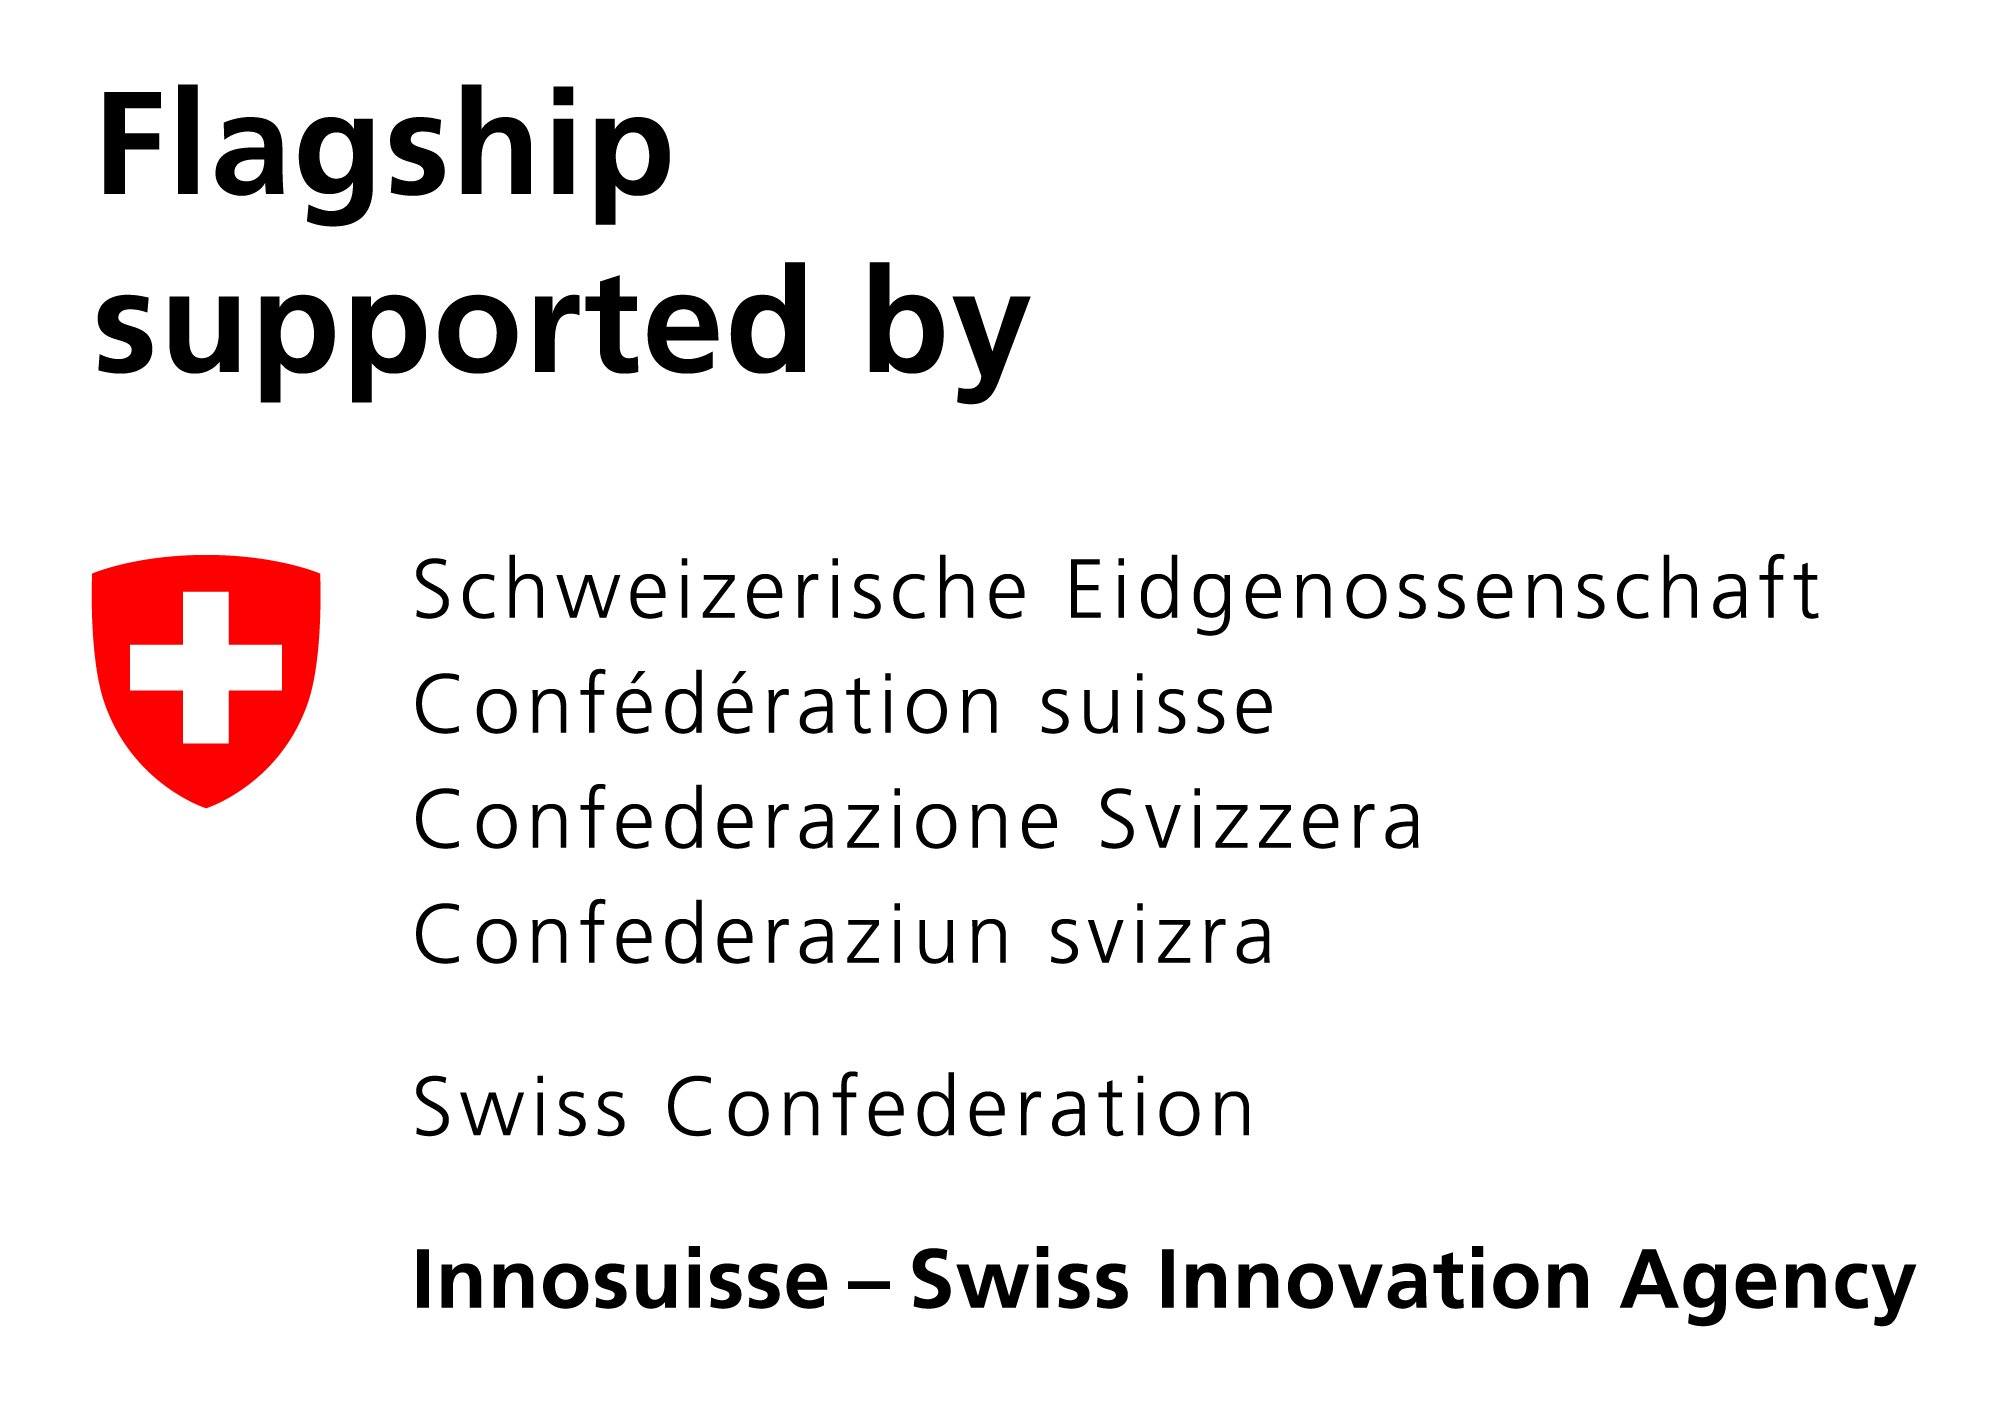 Logo Flagship sponsored by Innosuisse